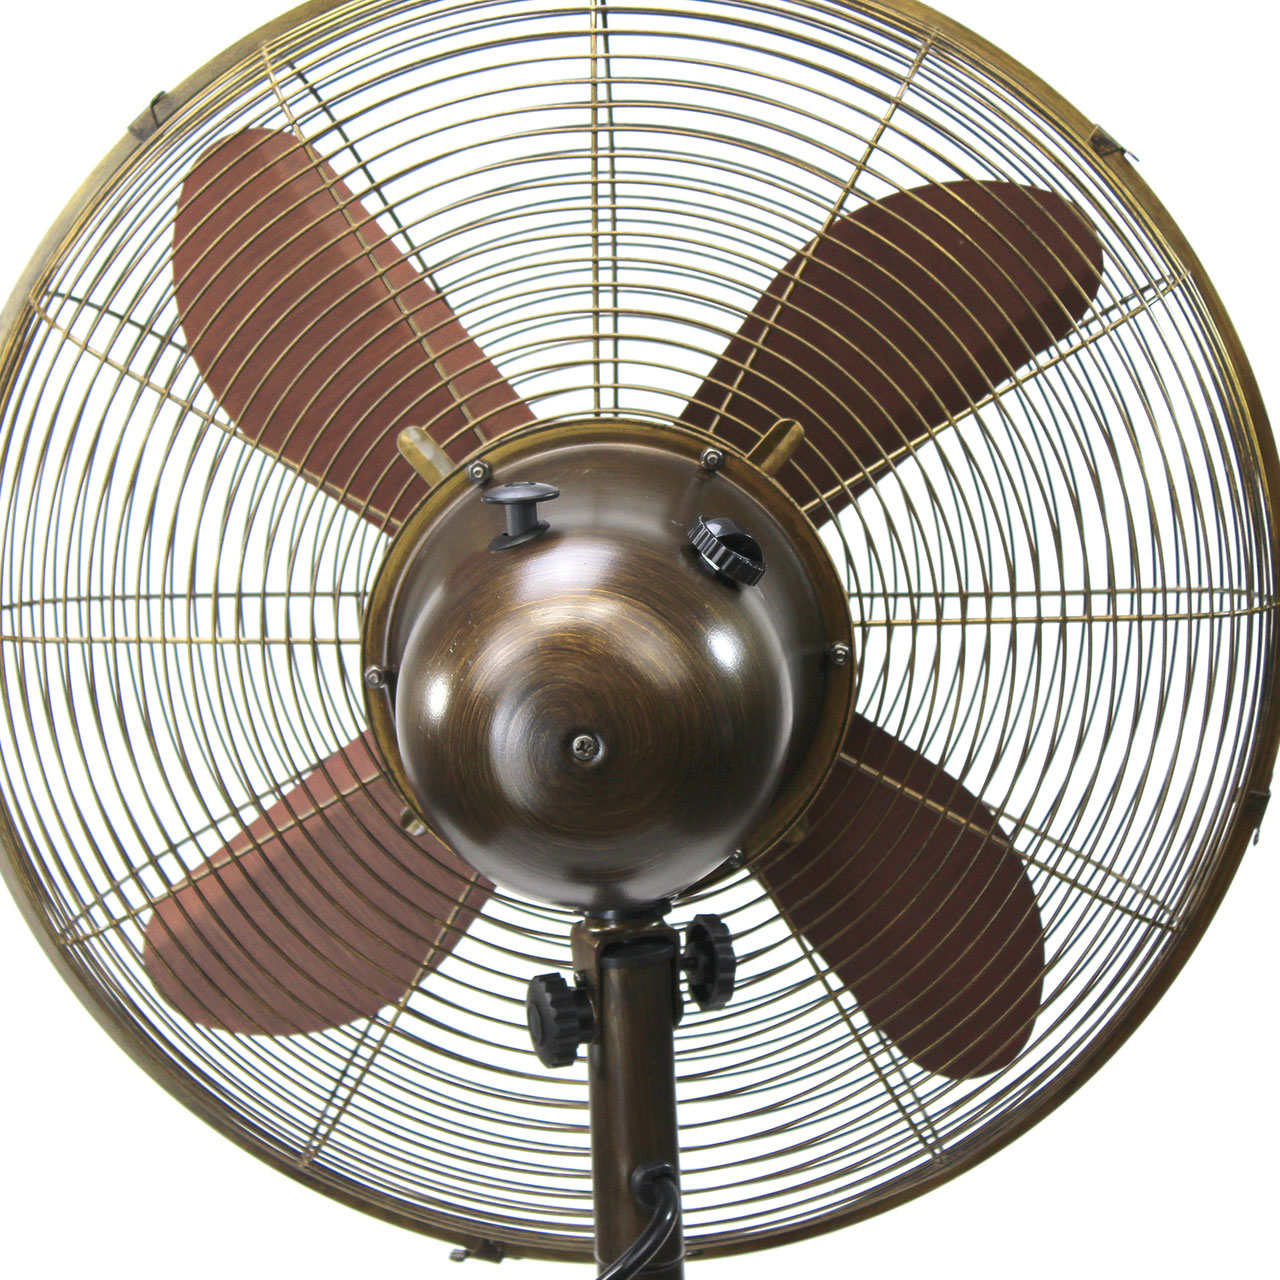 DecoBREEZE DBF1080 Adjustable Oscillating Outdoor Pedestal Fan Prestigious Brown 843730010808 | eBay